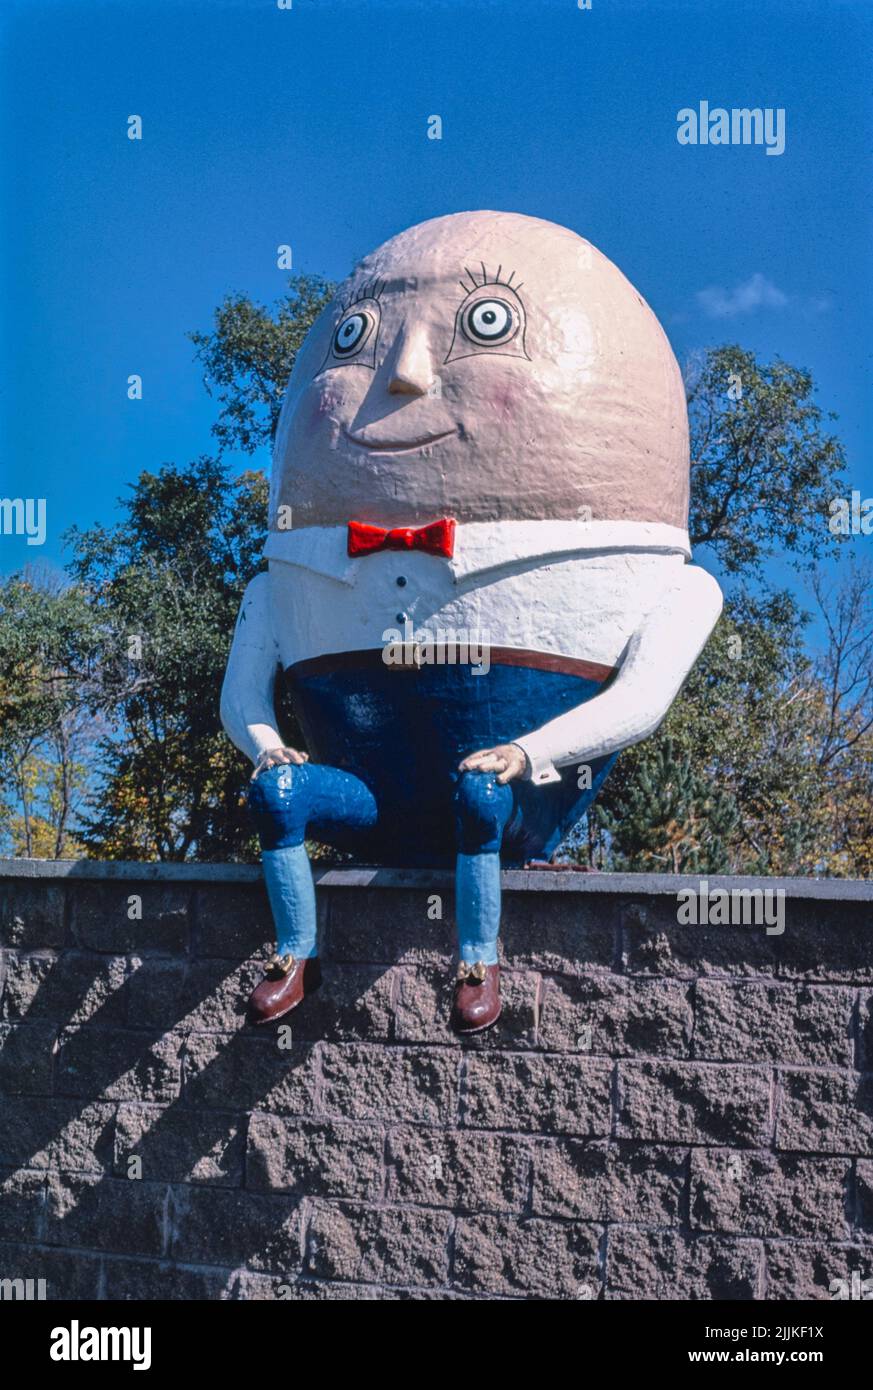 John Margolies - Humpty Dumpty - Storybook Land Park, Aberdeen, South Dakota - 1987 Stock Photo